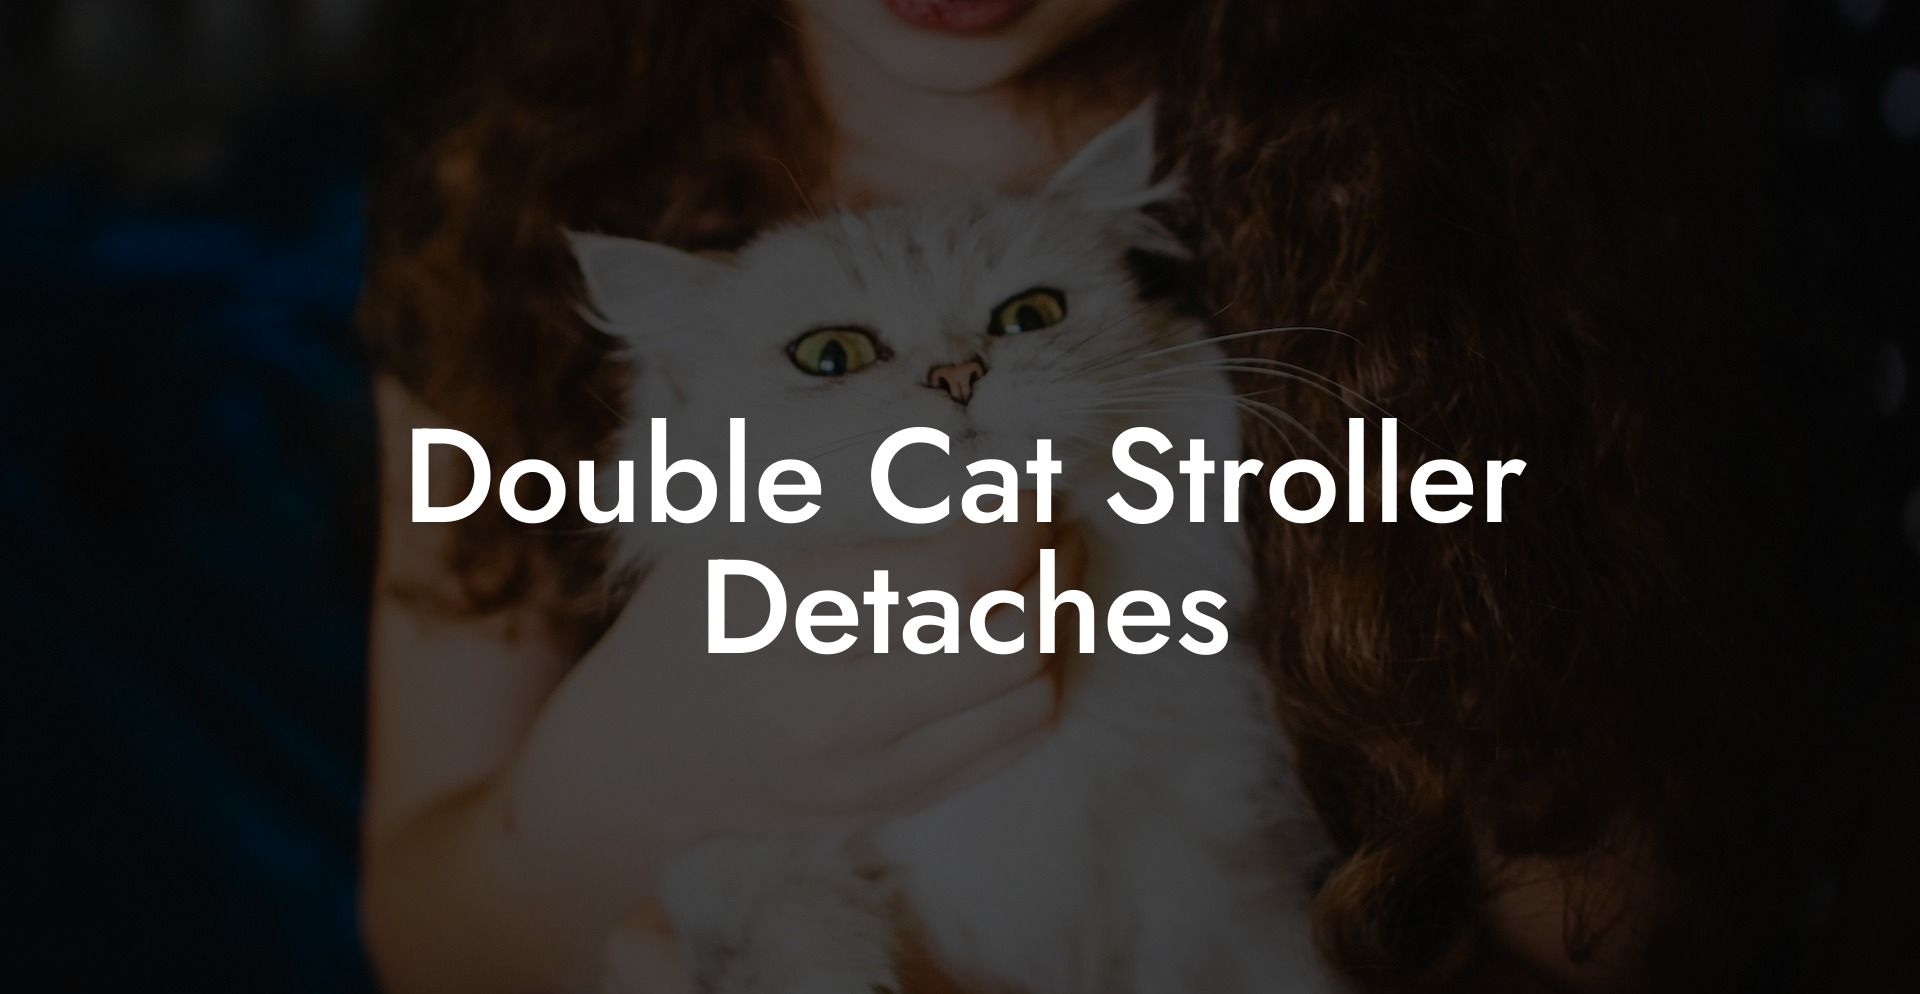 Double Cat Stroller Detaches